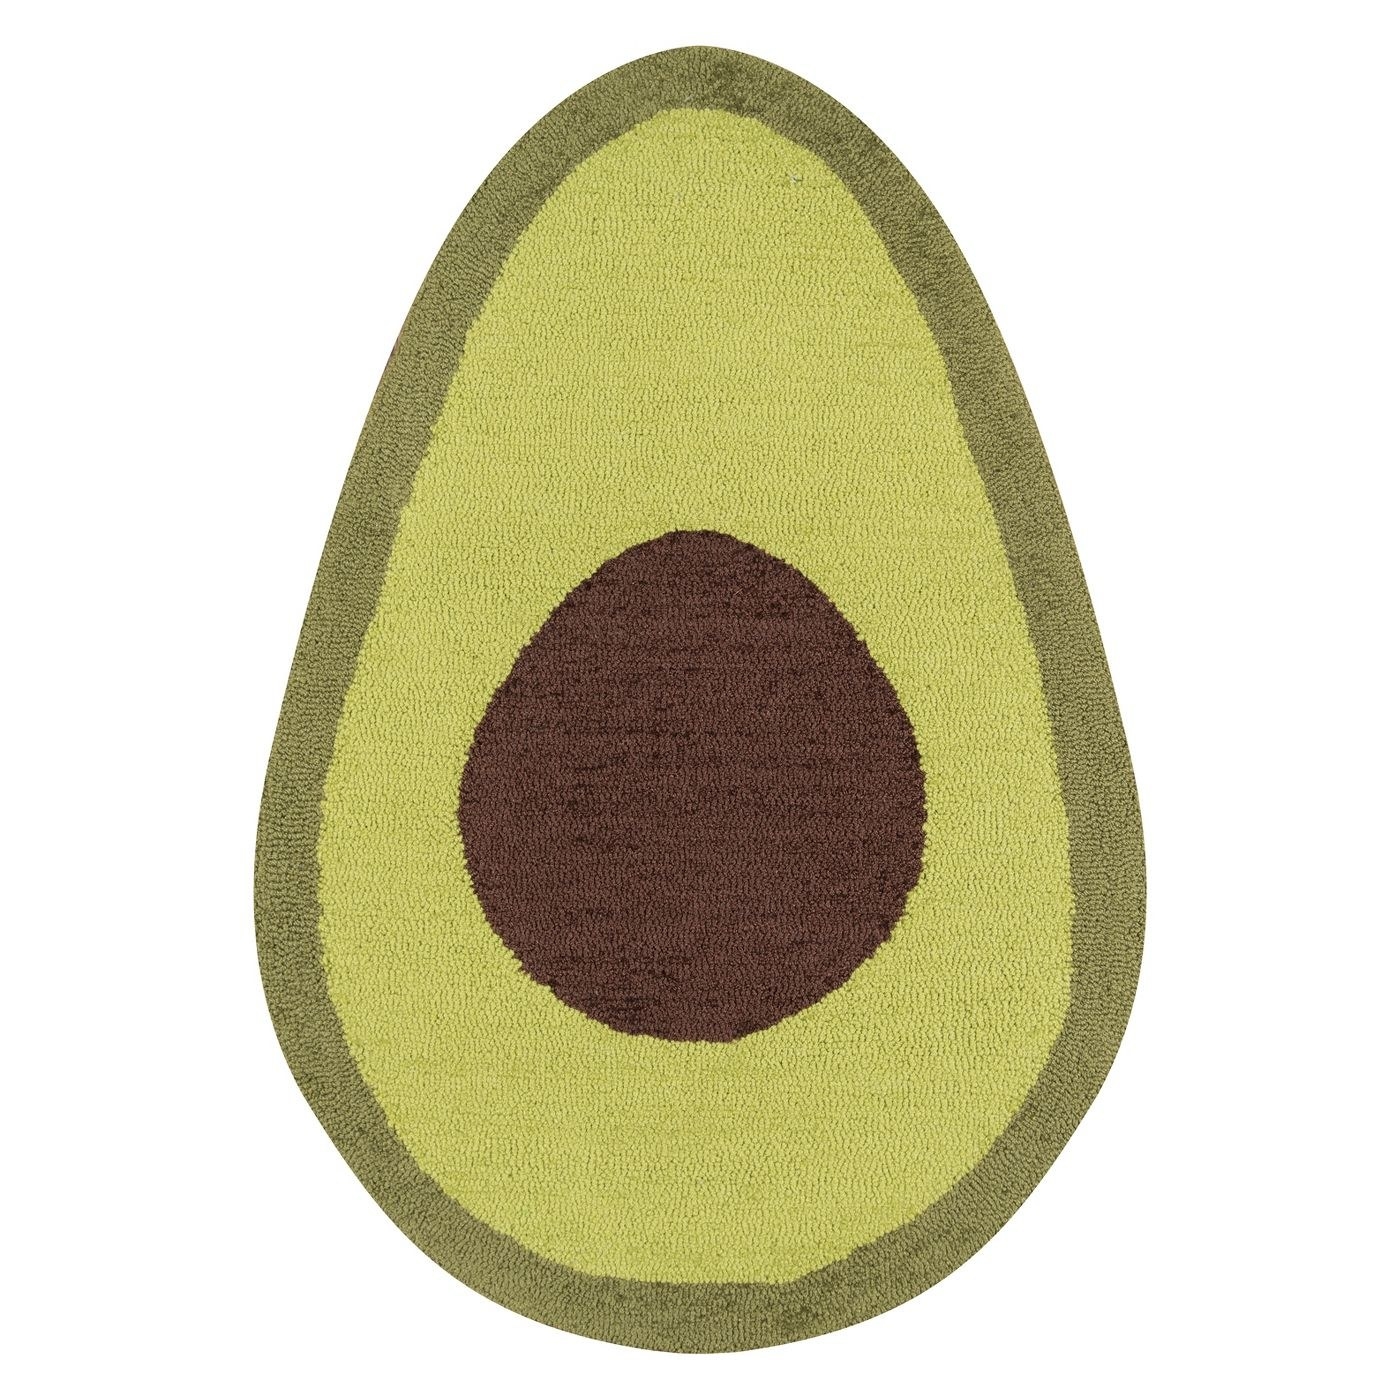 Green and brown avocado shaped rug 